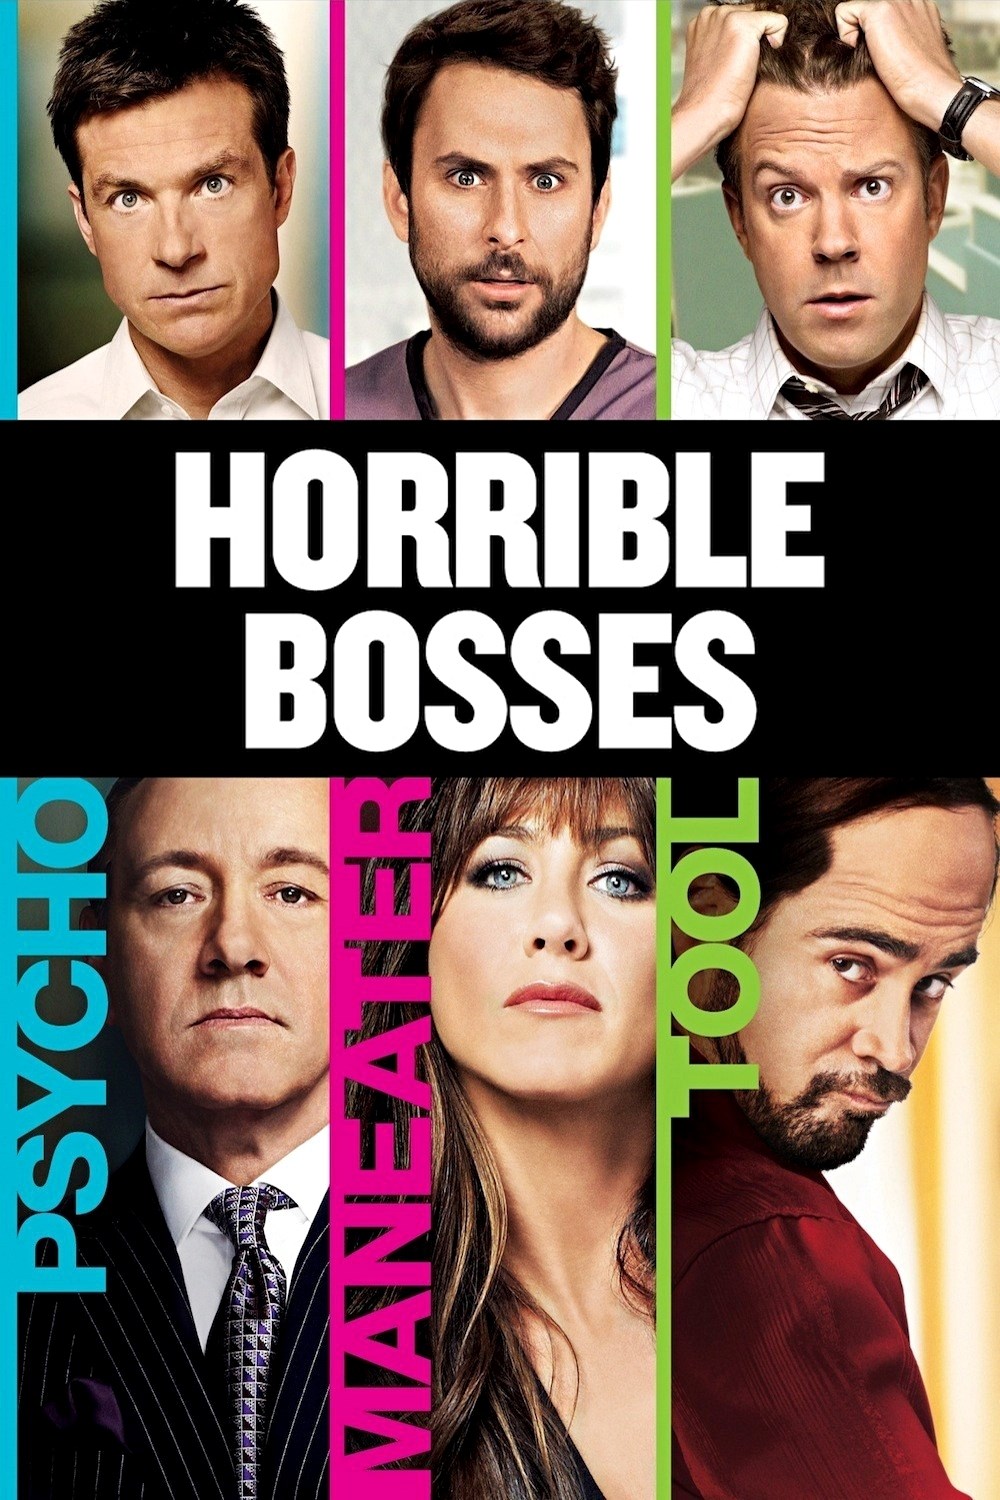 Horrible bosses 2016 dvdrip xvid amiable avi english subtitles